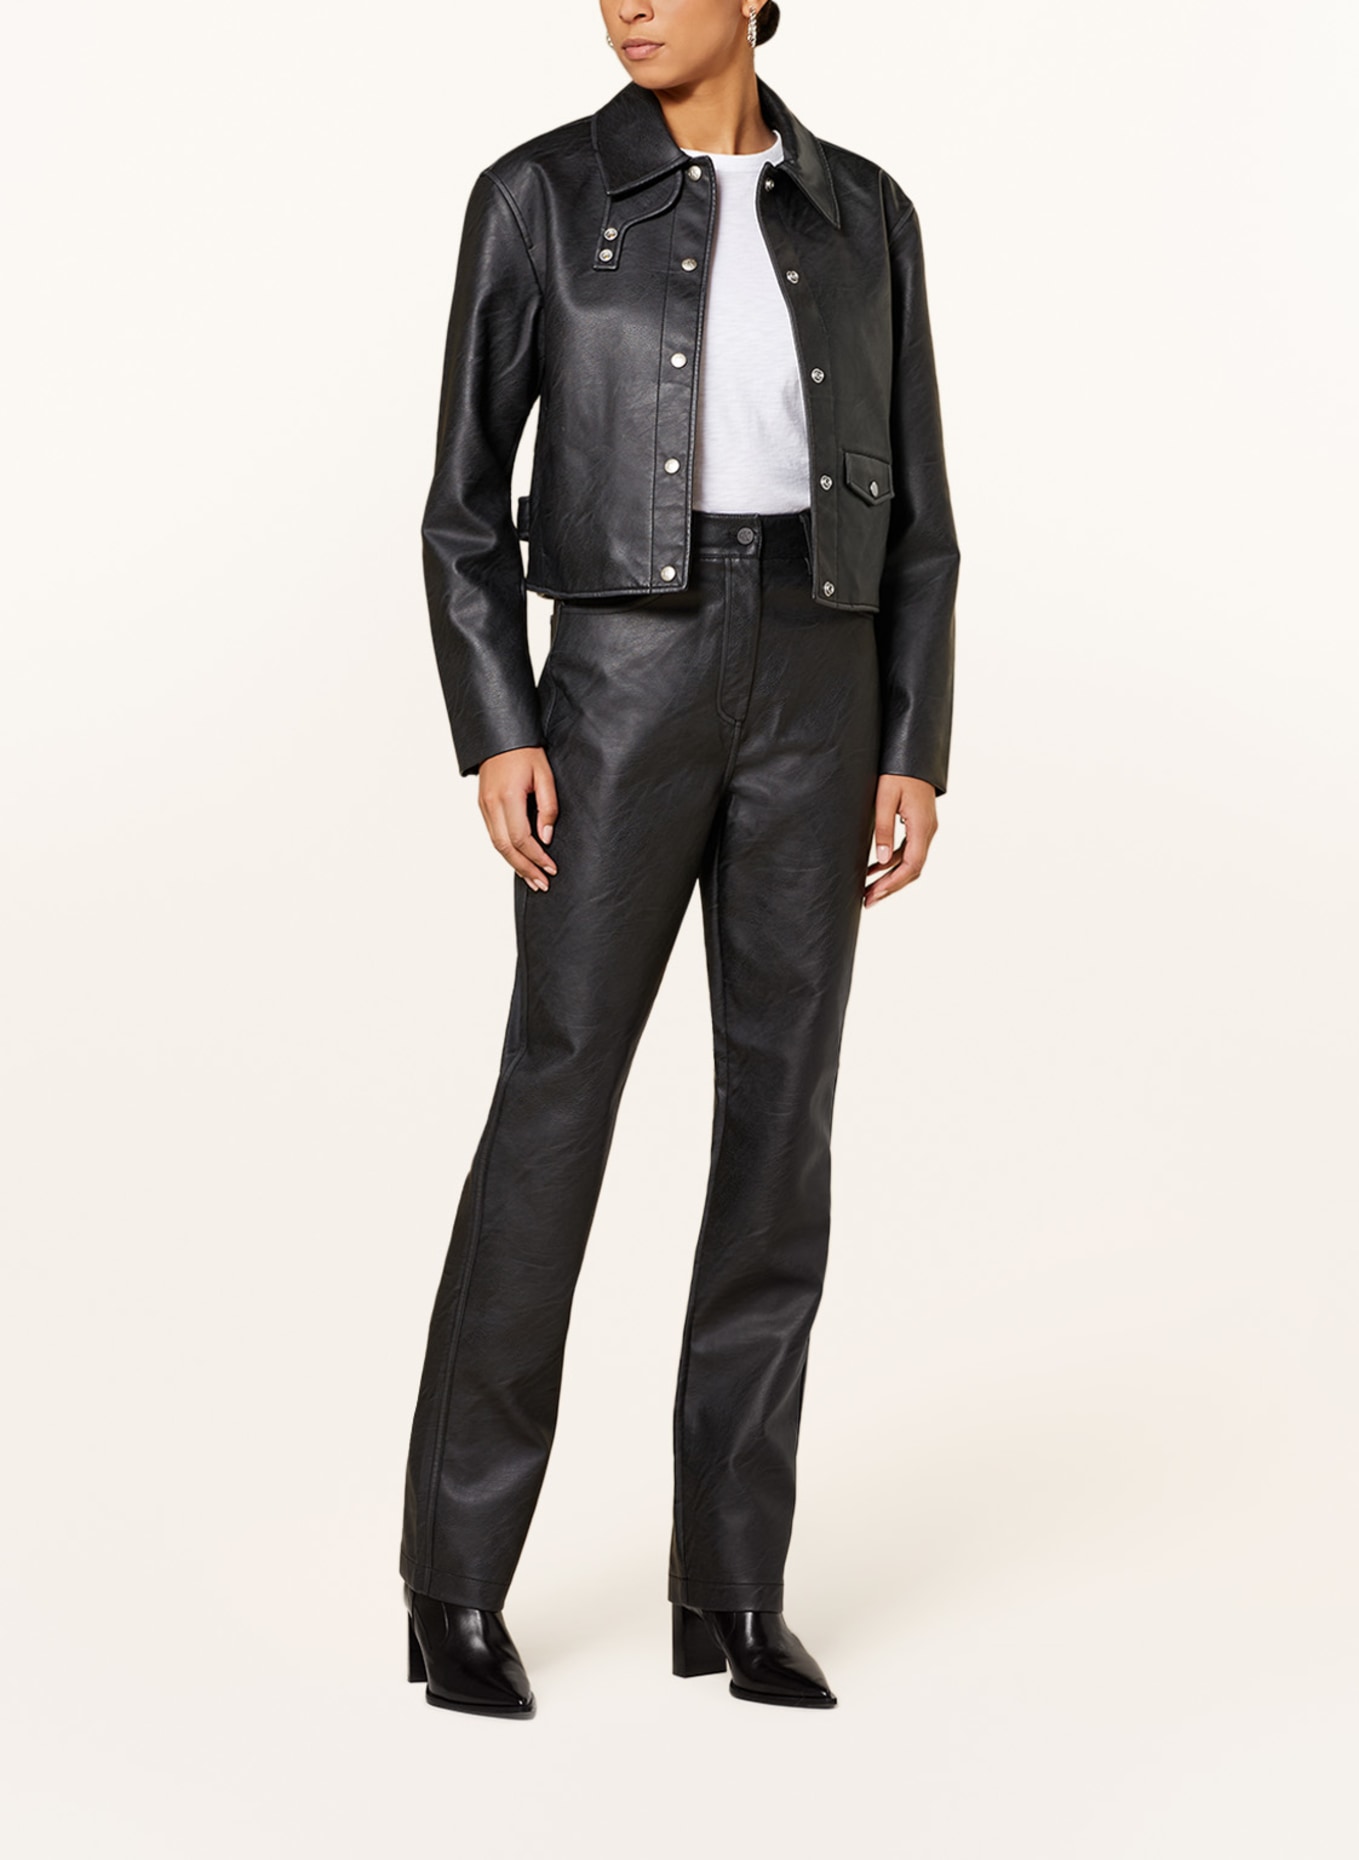 Calvin Klein Plus Size Knit Detail Women's Leather Jacket Black NWT $600 |  eBay